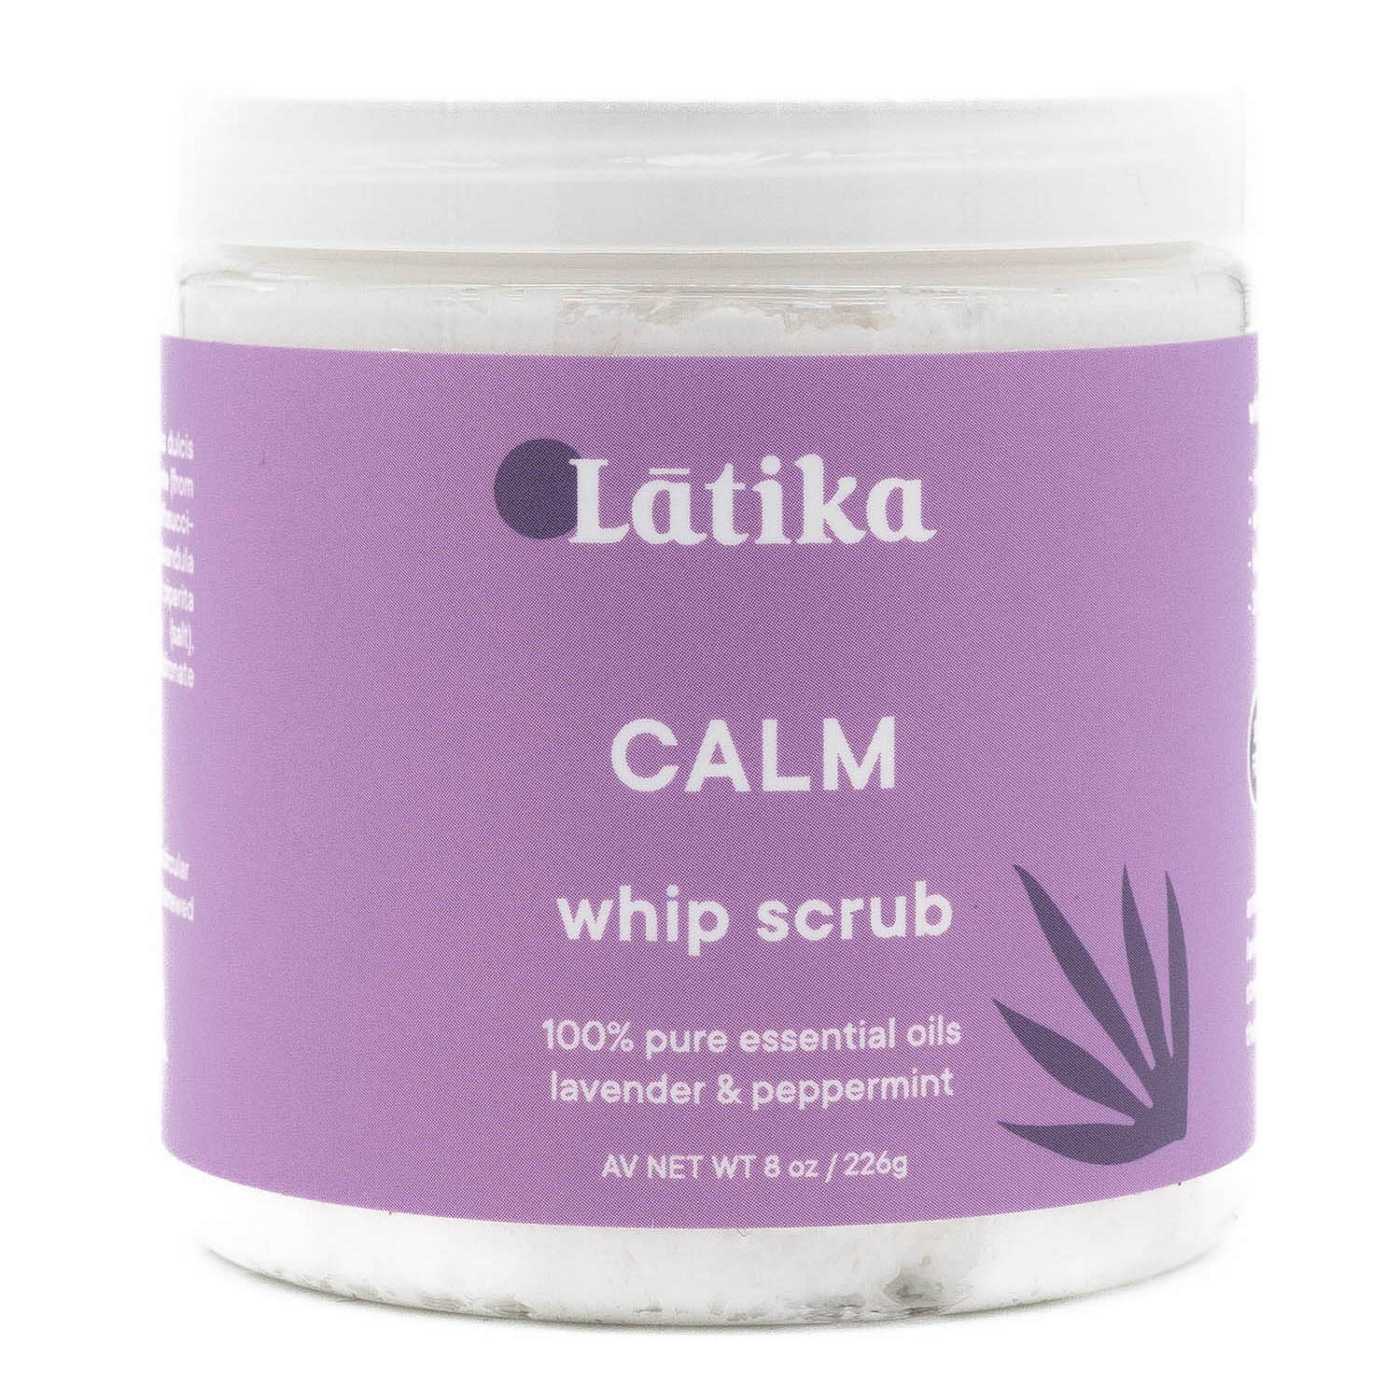 Latika Body Essentials Whip Scrub Calm; image 1 of 5